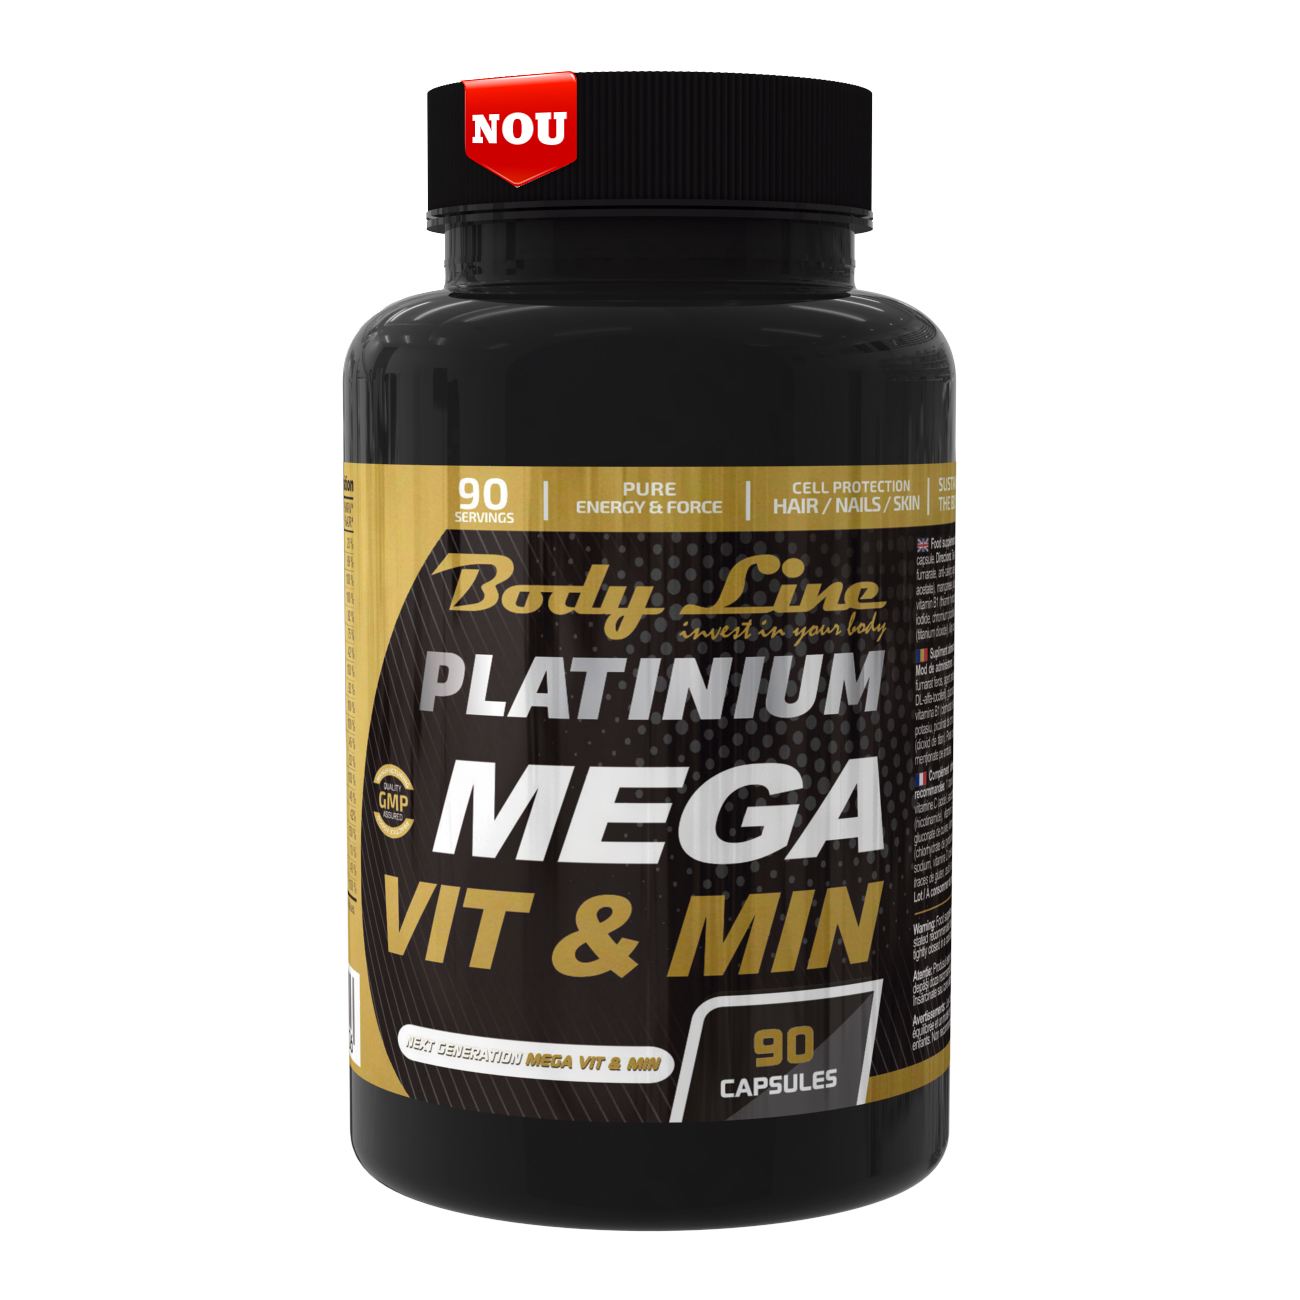 Platinium Mega Vit & Min - Cele mai bune vitamine